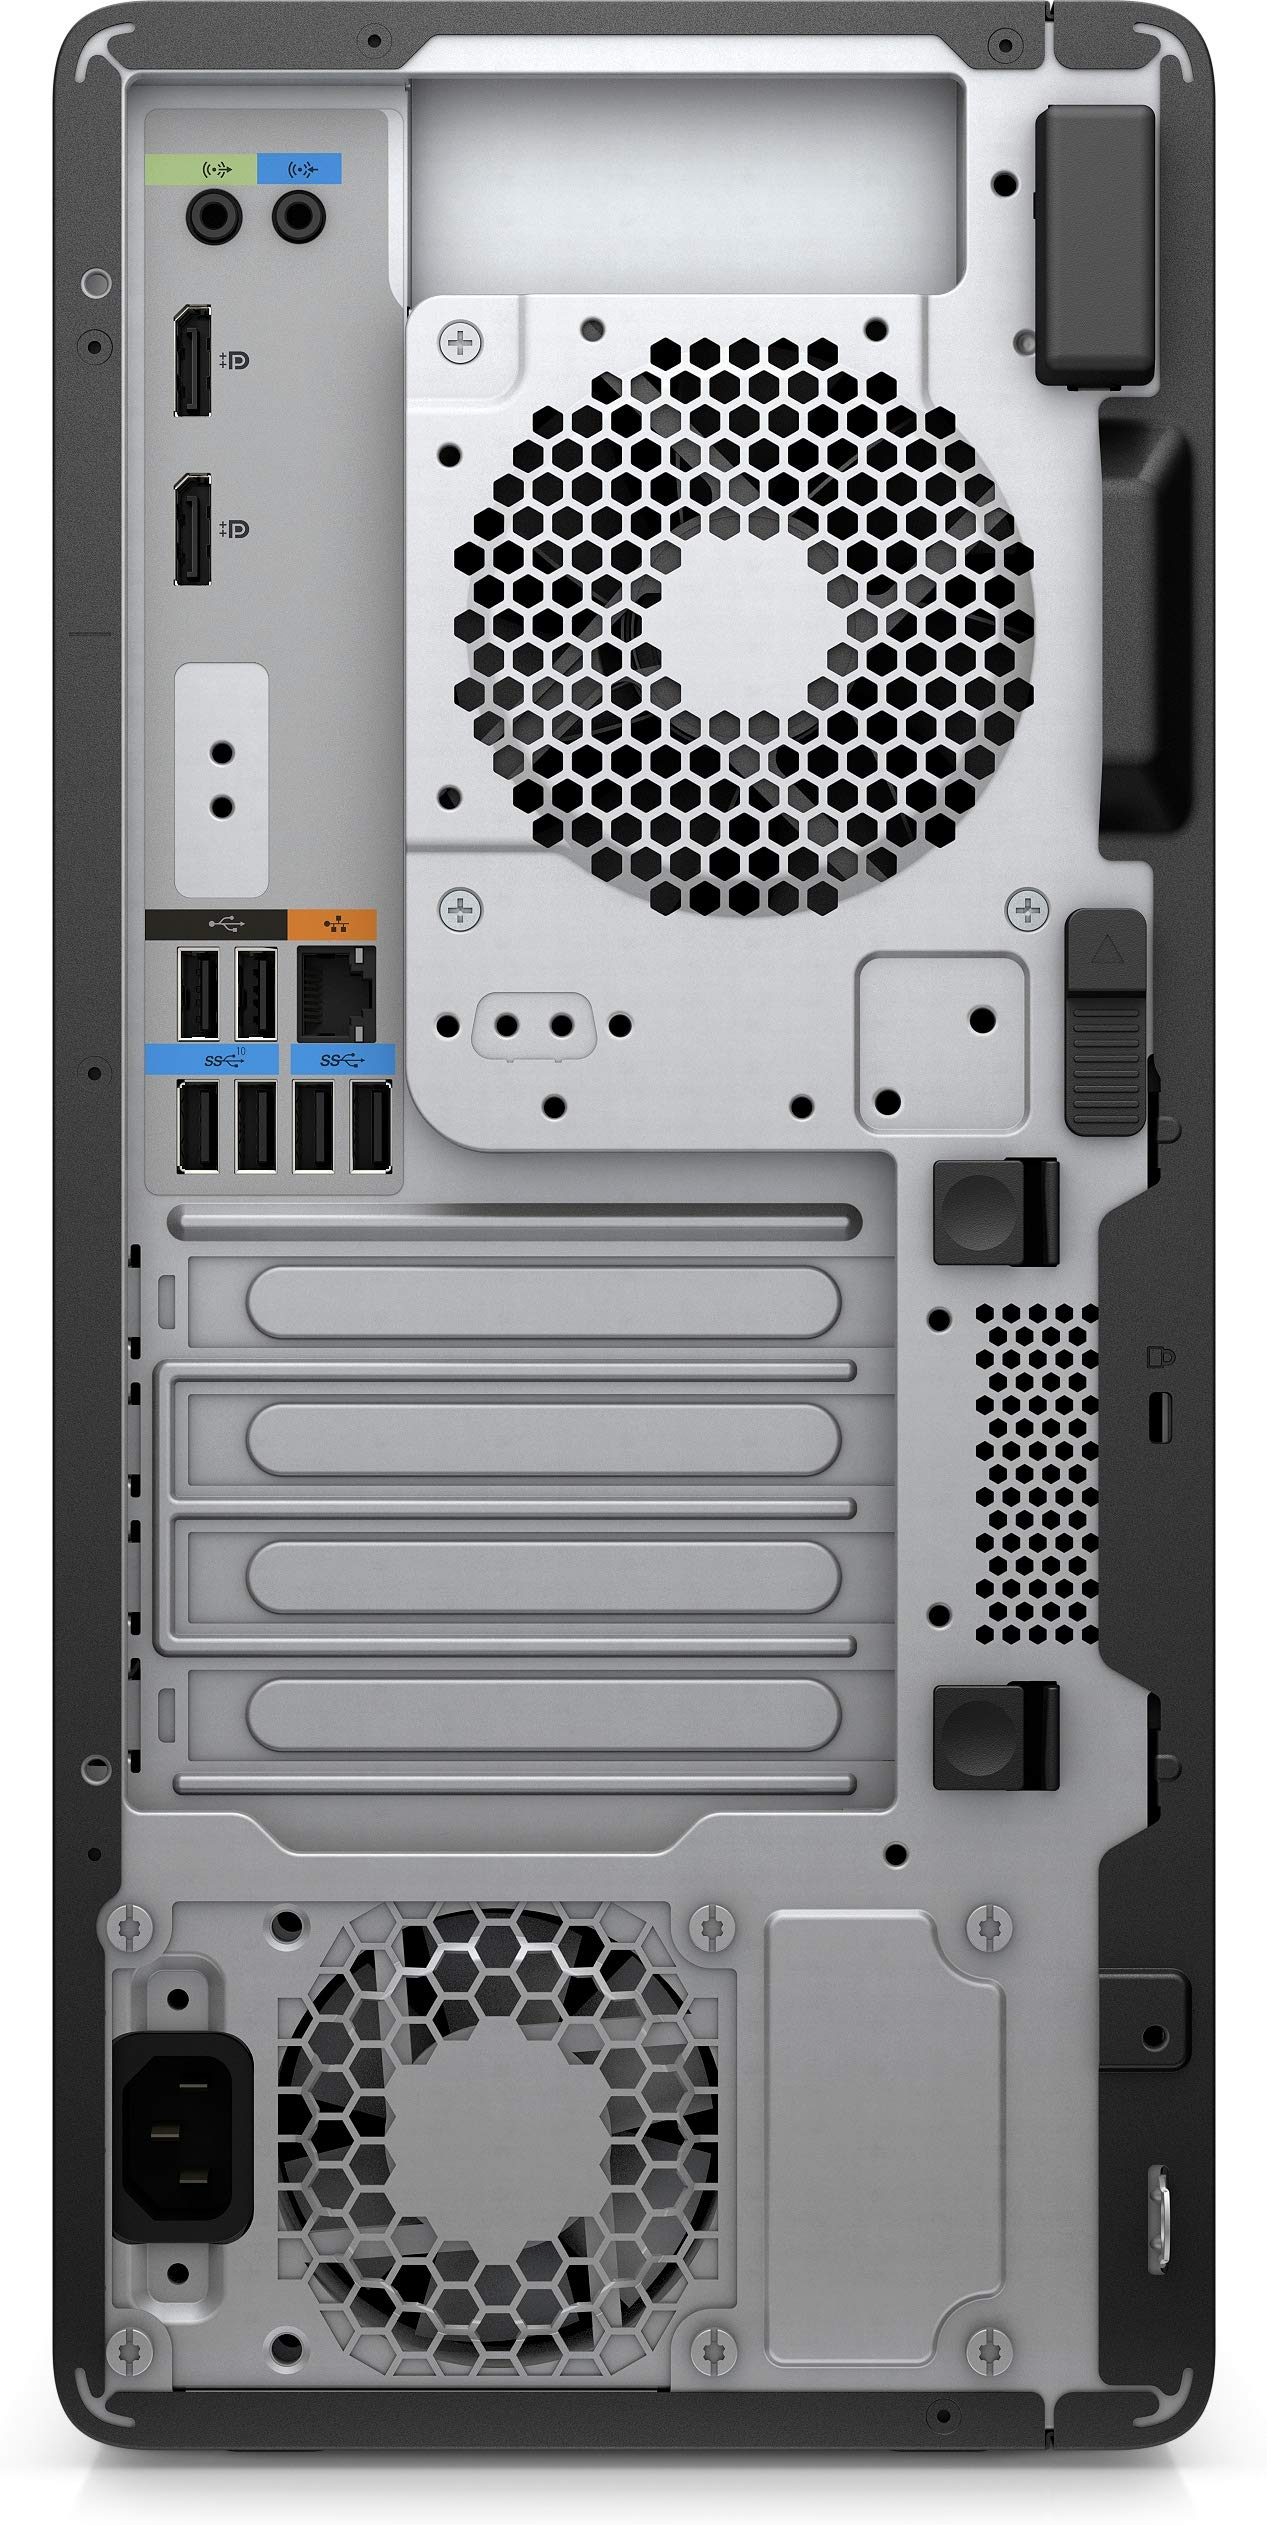 HP Z2 G5 Workstation - 1 x Xeon W-1250-16 GB RAM - 1 TB HDD - Tower - Black - Windows 10 Pro for WorkstationsIntel UHD Graphics P630 - DVD-Writer - Serial ATA/600 Controller - 0, 1 RAID Levels - in